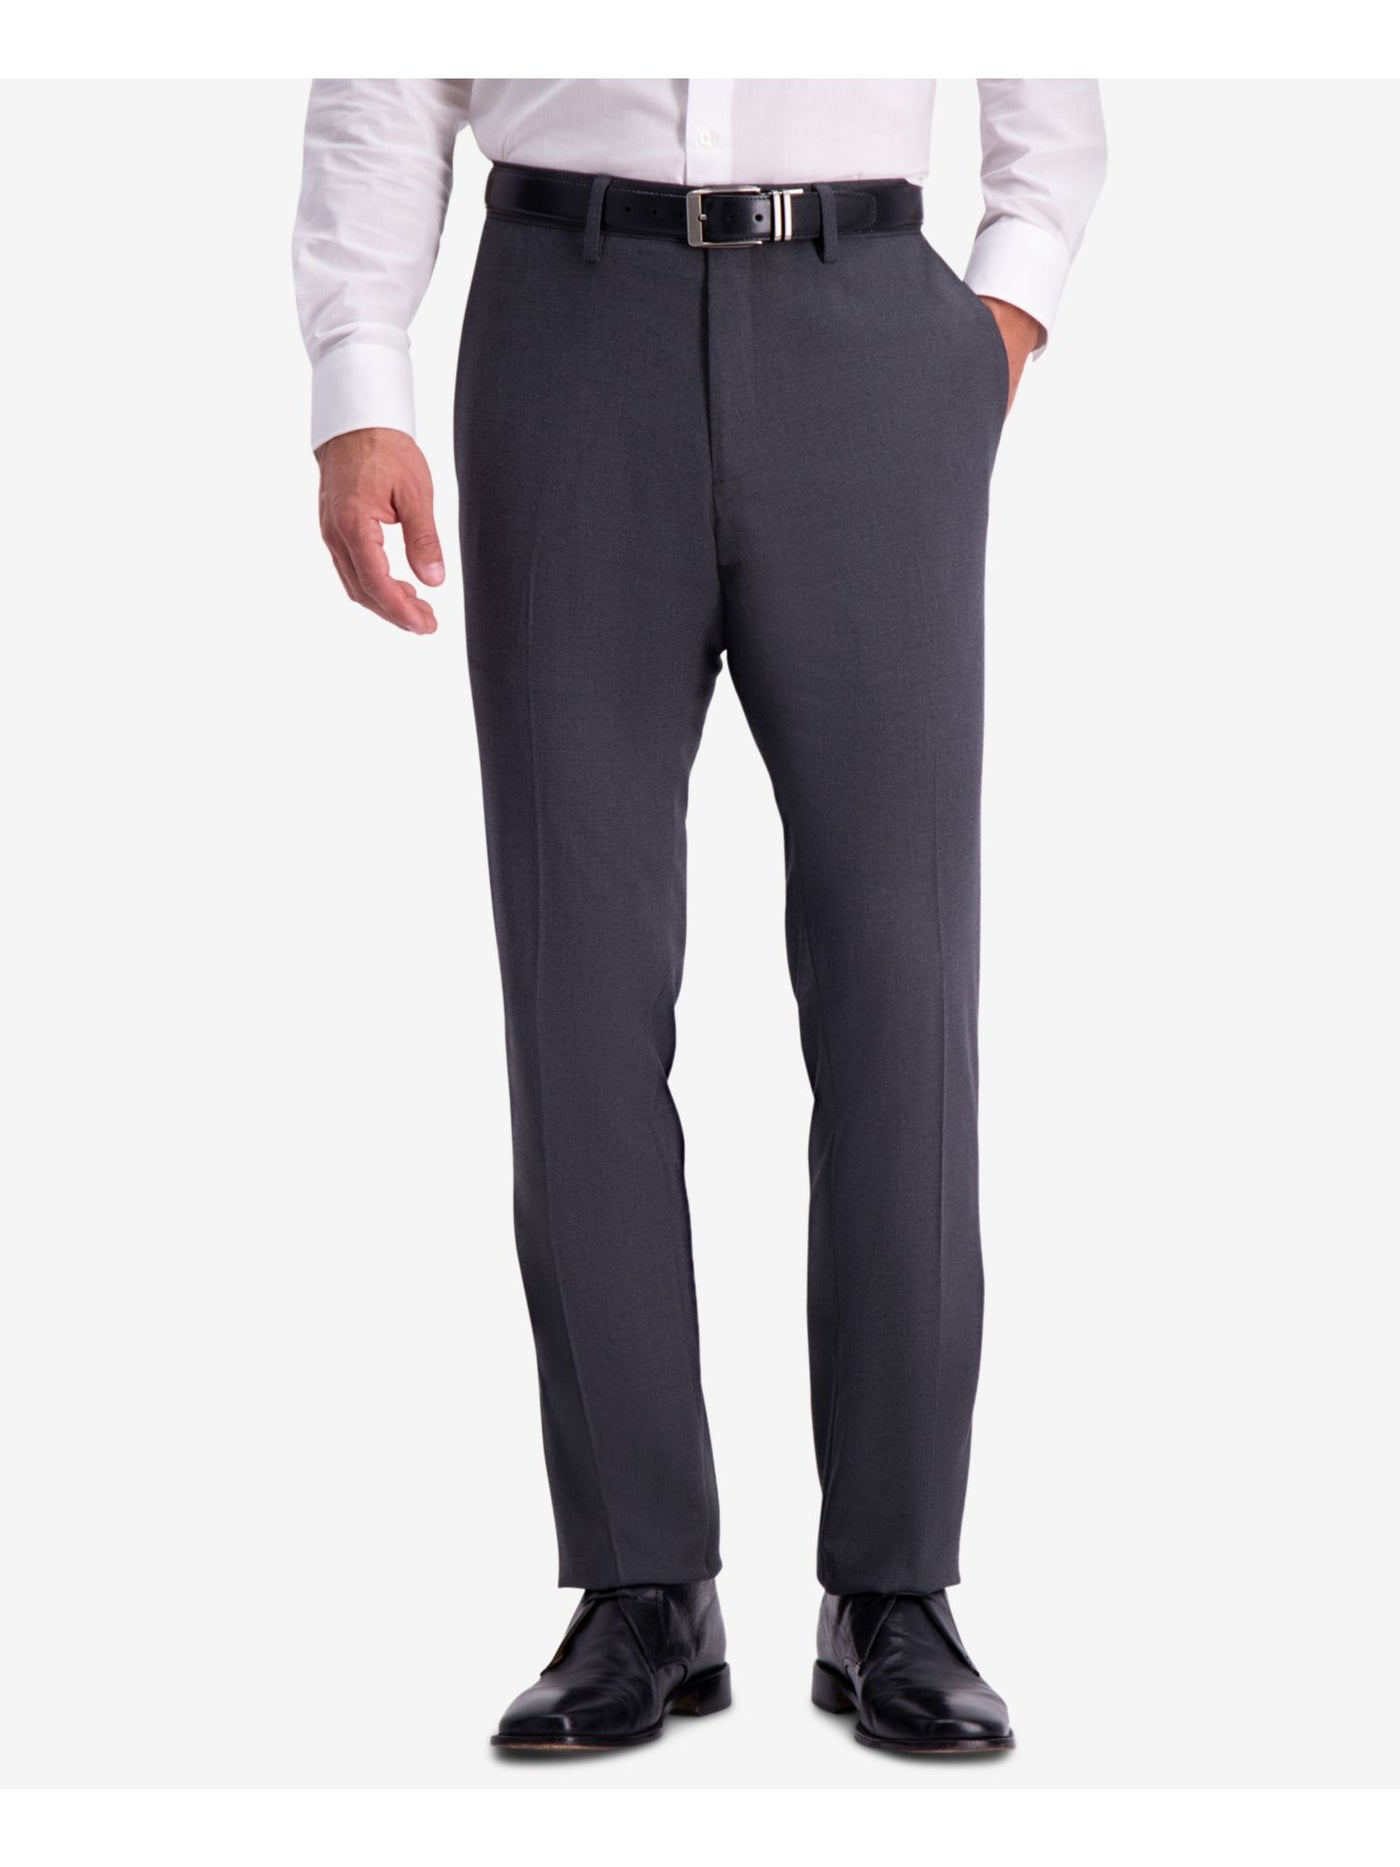 KENNETH COLE Mens Gray Slim Fit Pants 32W X 30L